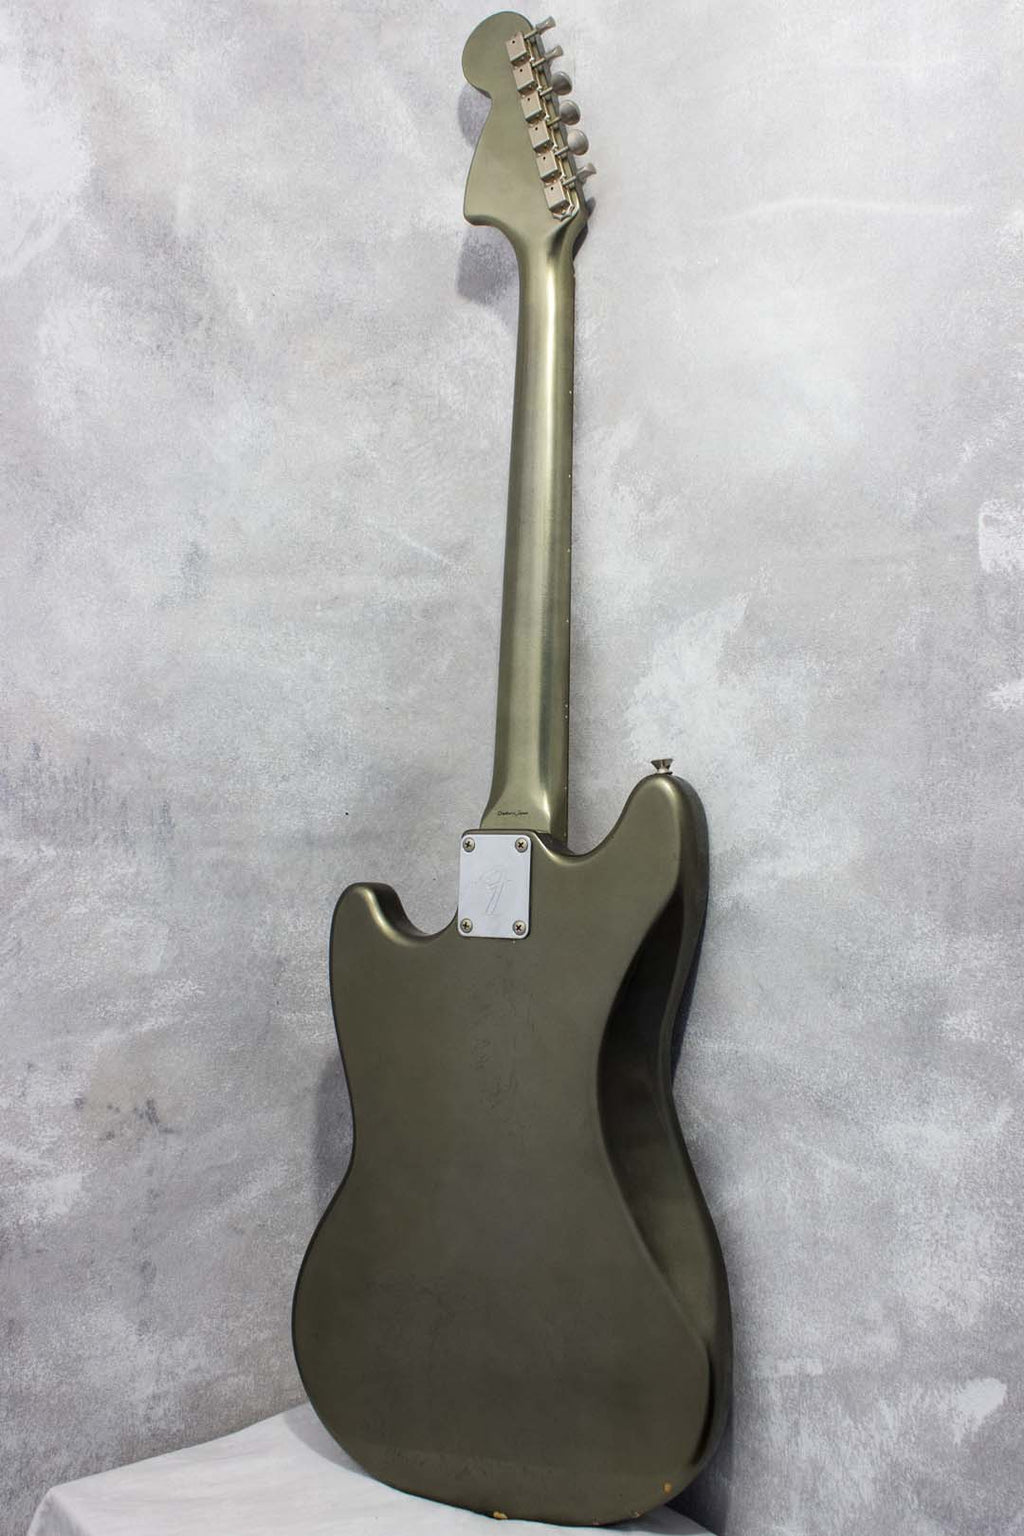 Fender Japan '69 Mustang MG69-65 Pewter Grey 2000